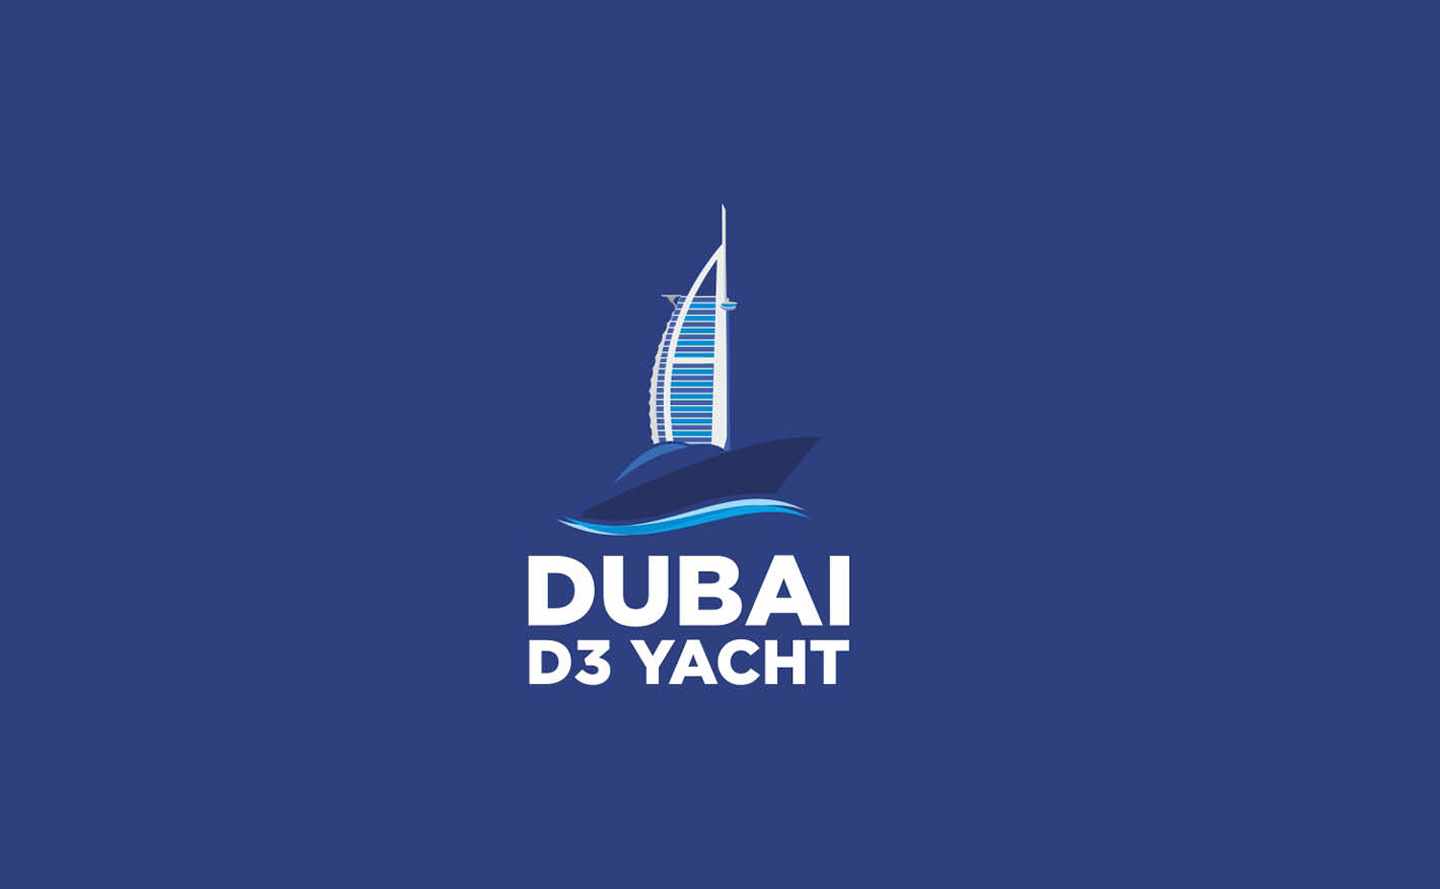 Dubai D3 Yacht- Visual Identity and Branding